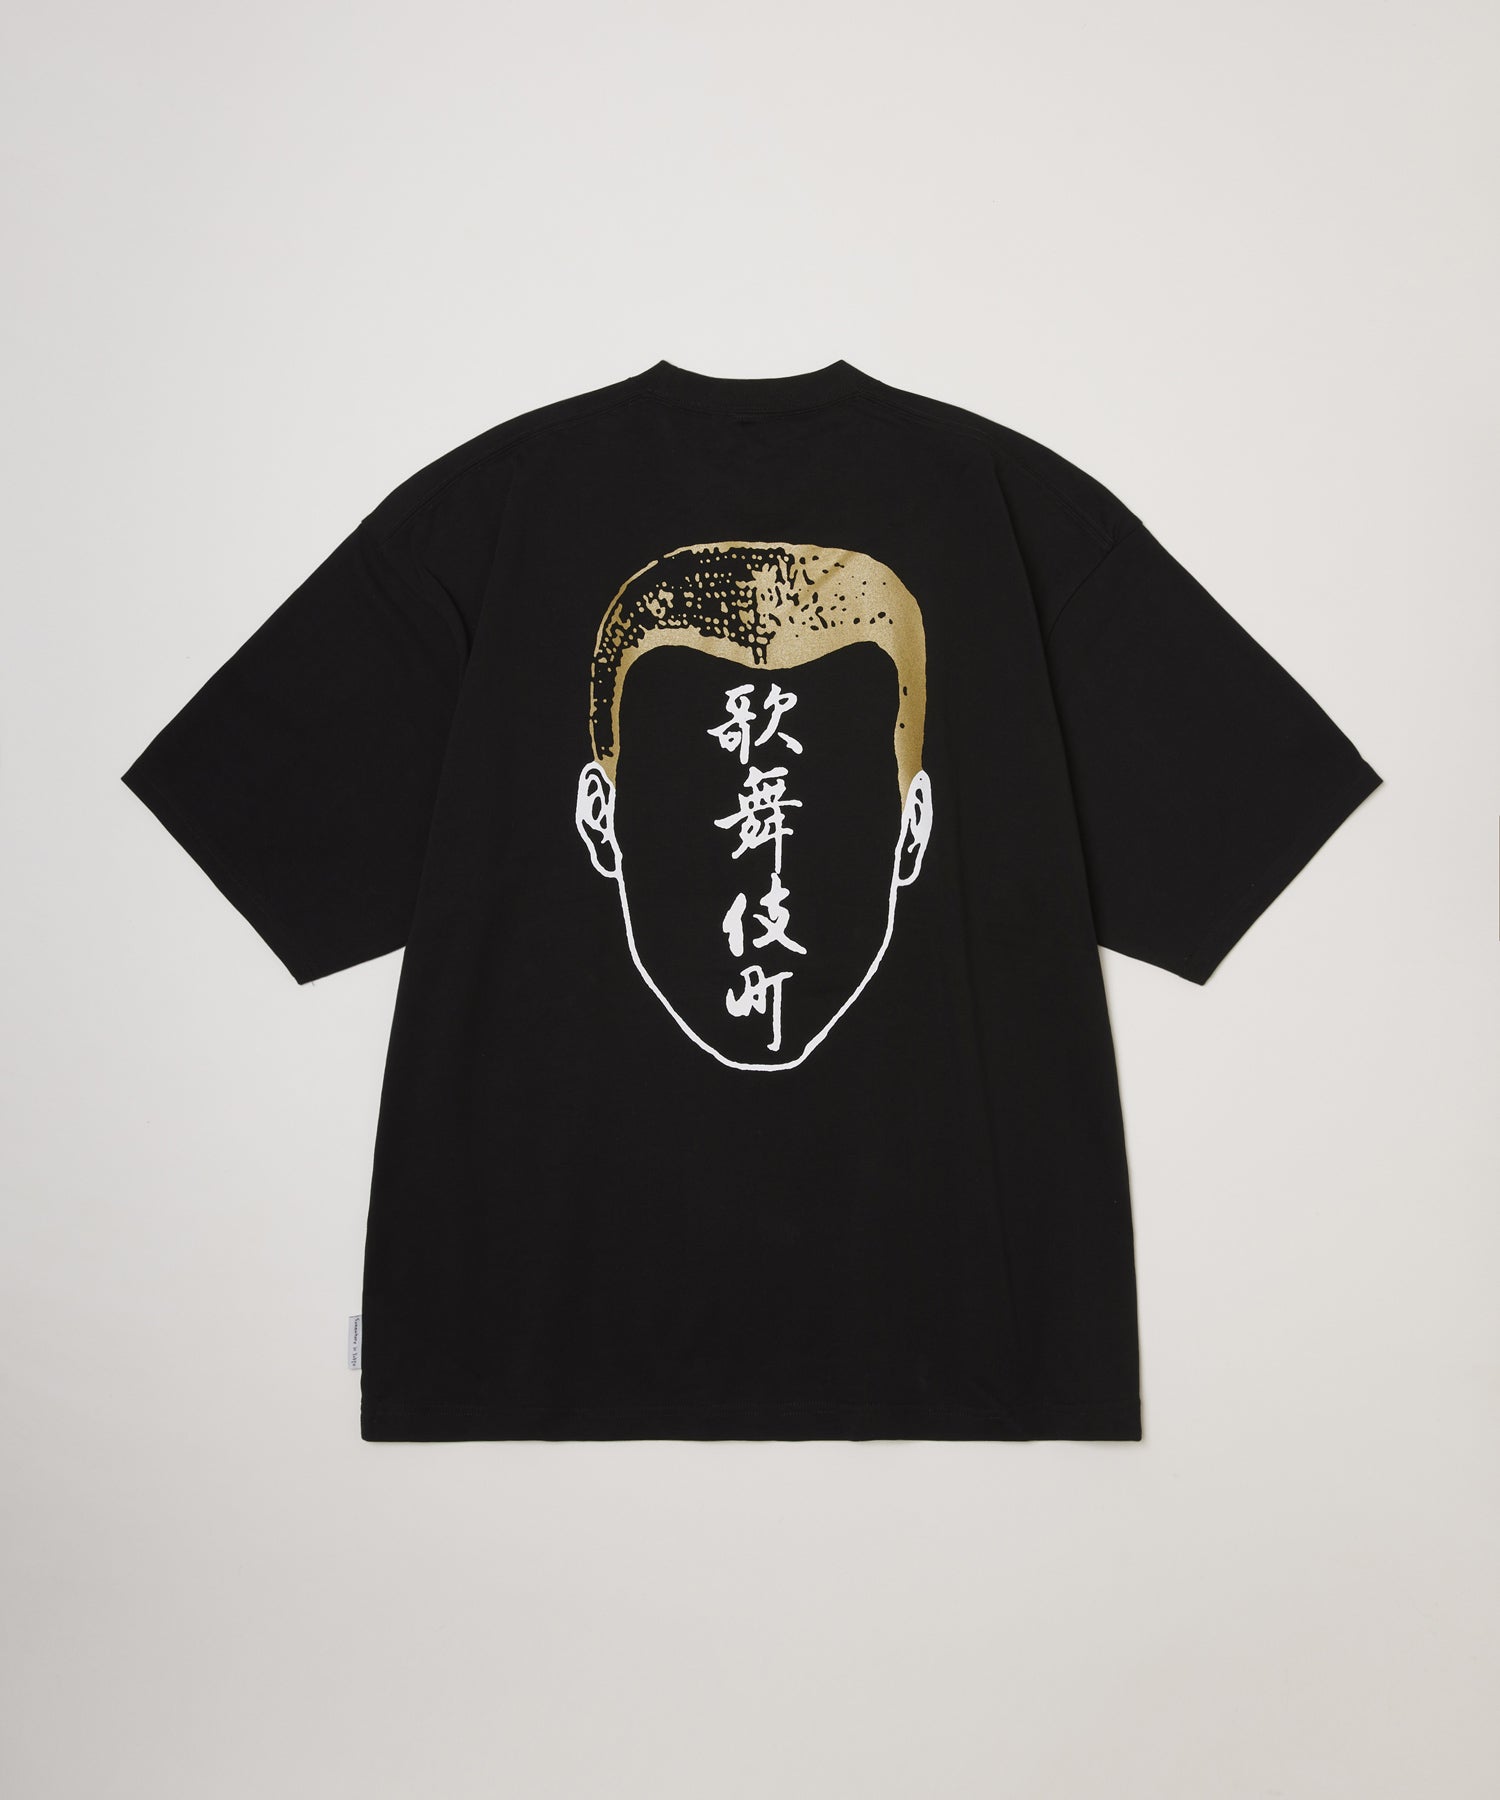 【Pre-Order】Kabukichou Tee Designed by Tomoo Gokita / Black x Gold